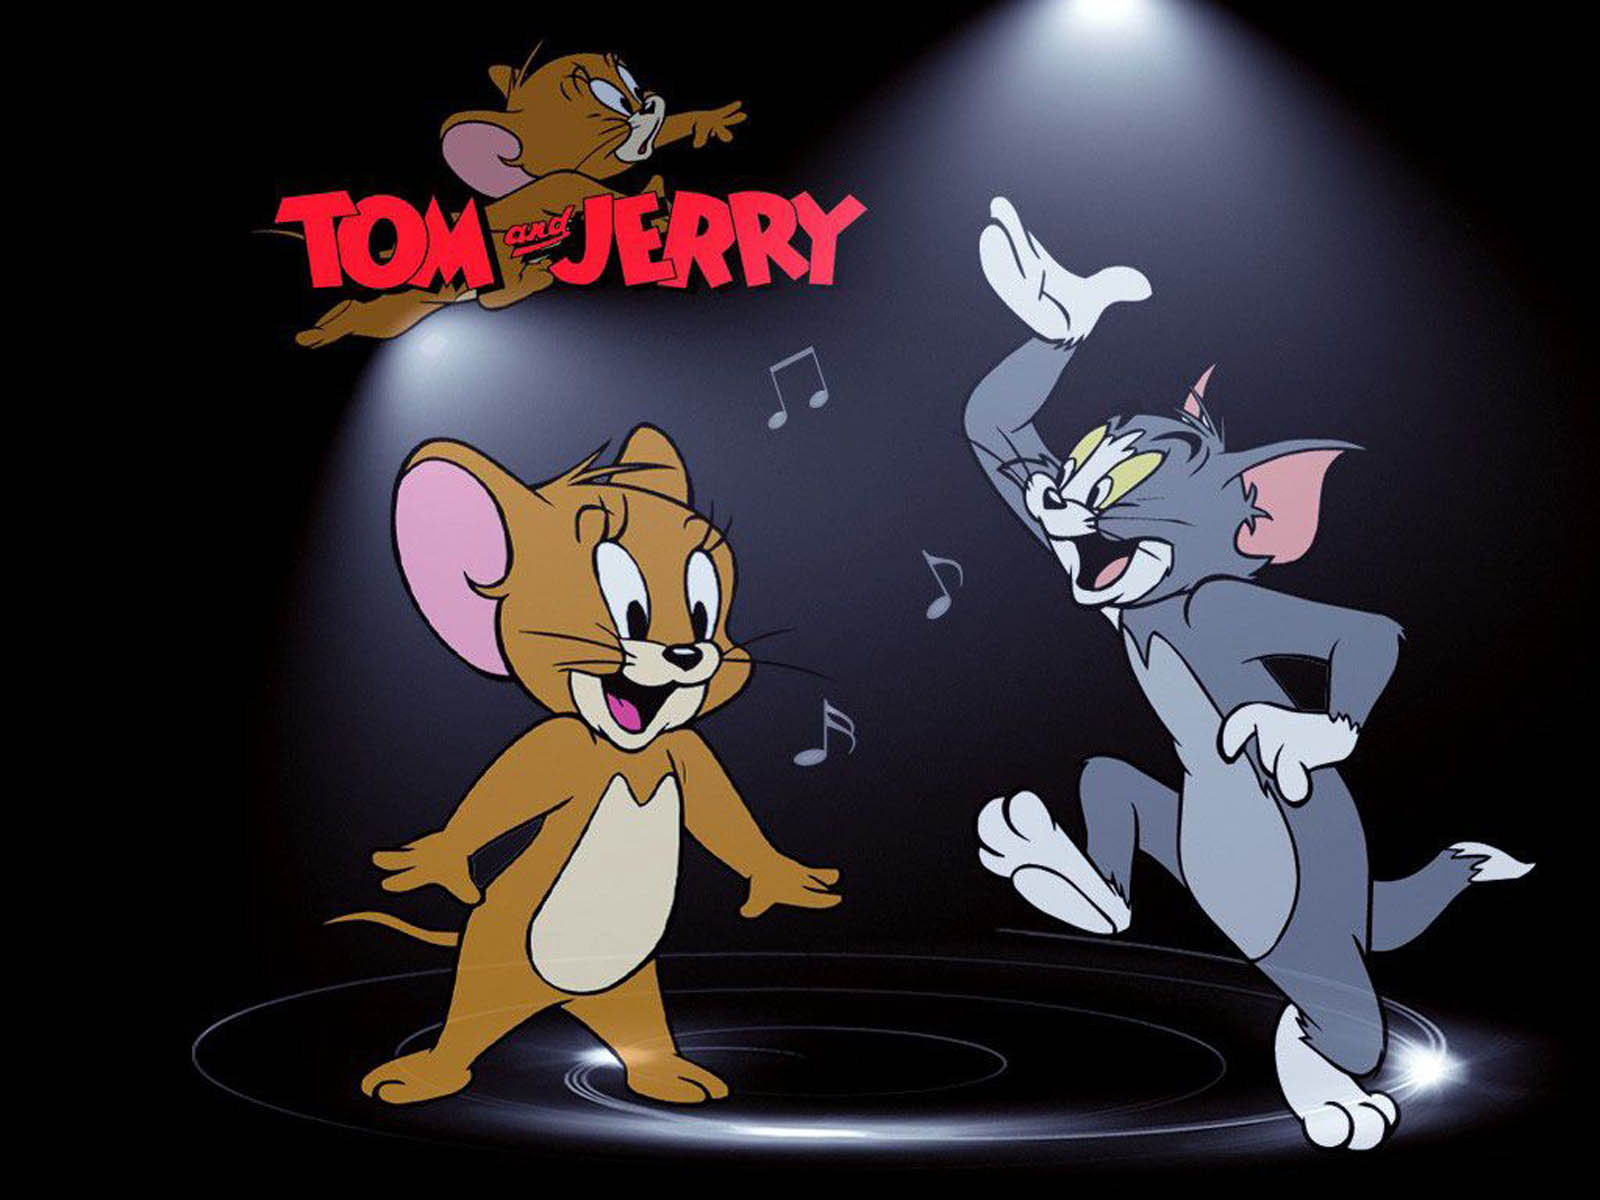 Tom And Jerry Galeri Kartun